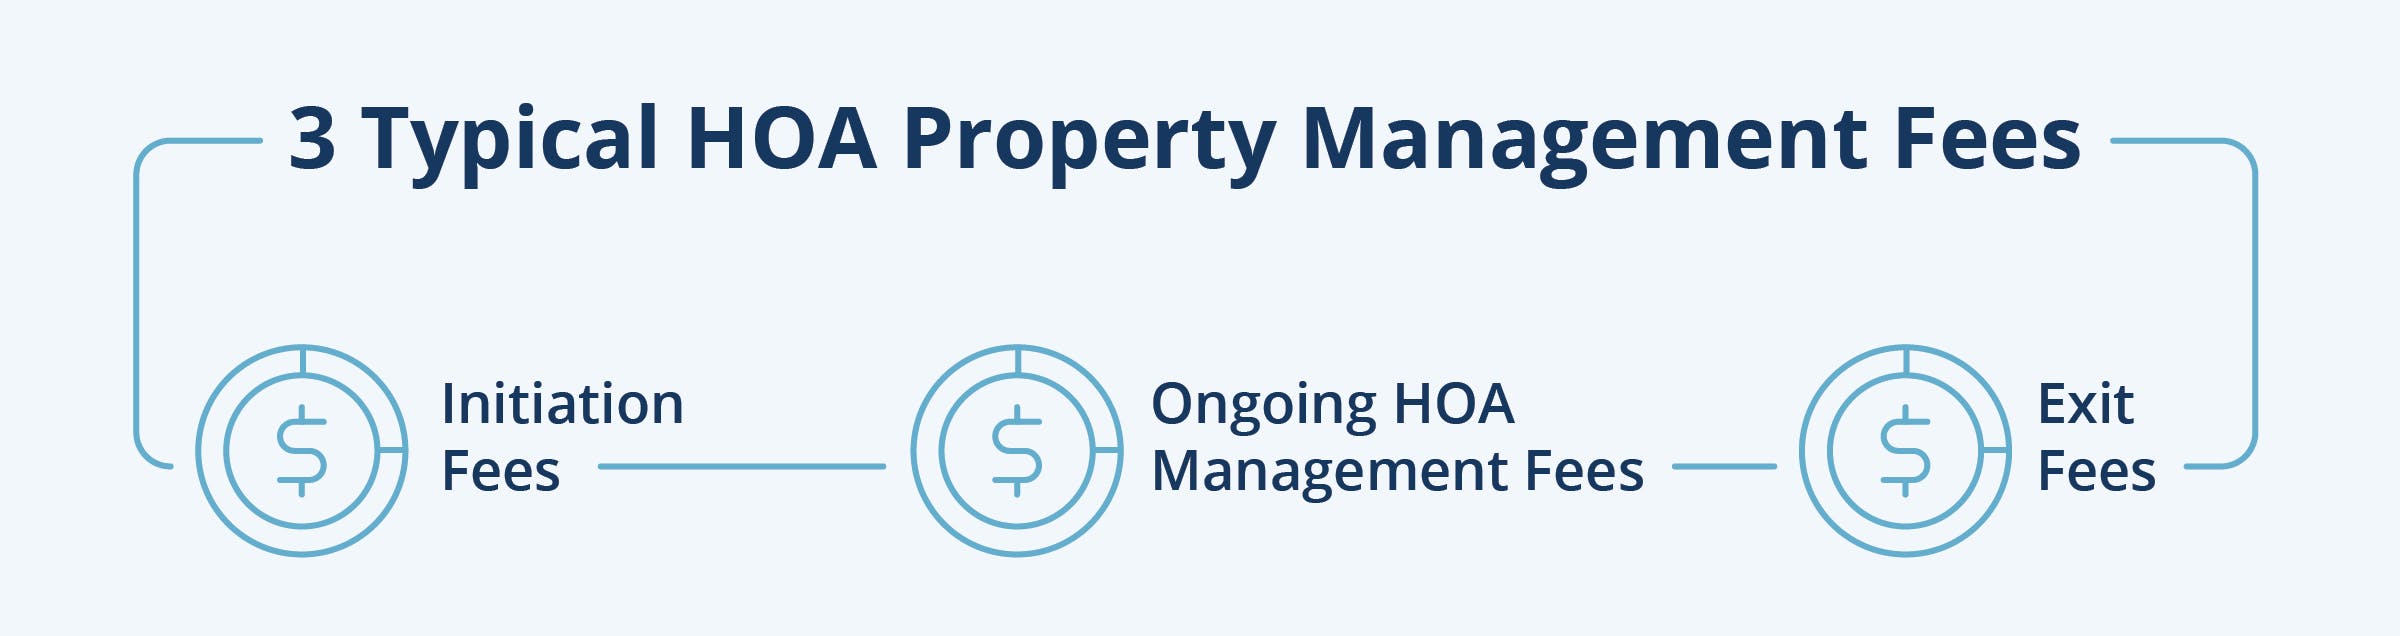 hoa management fees inline 2